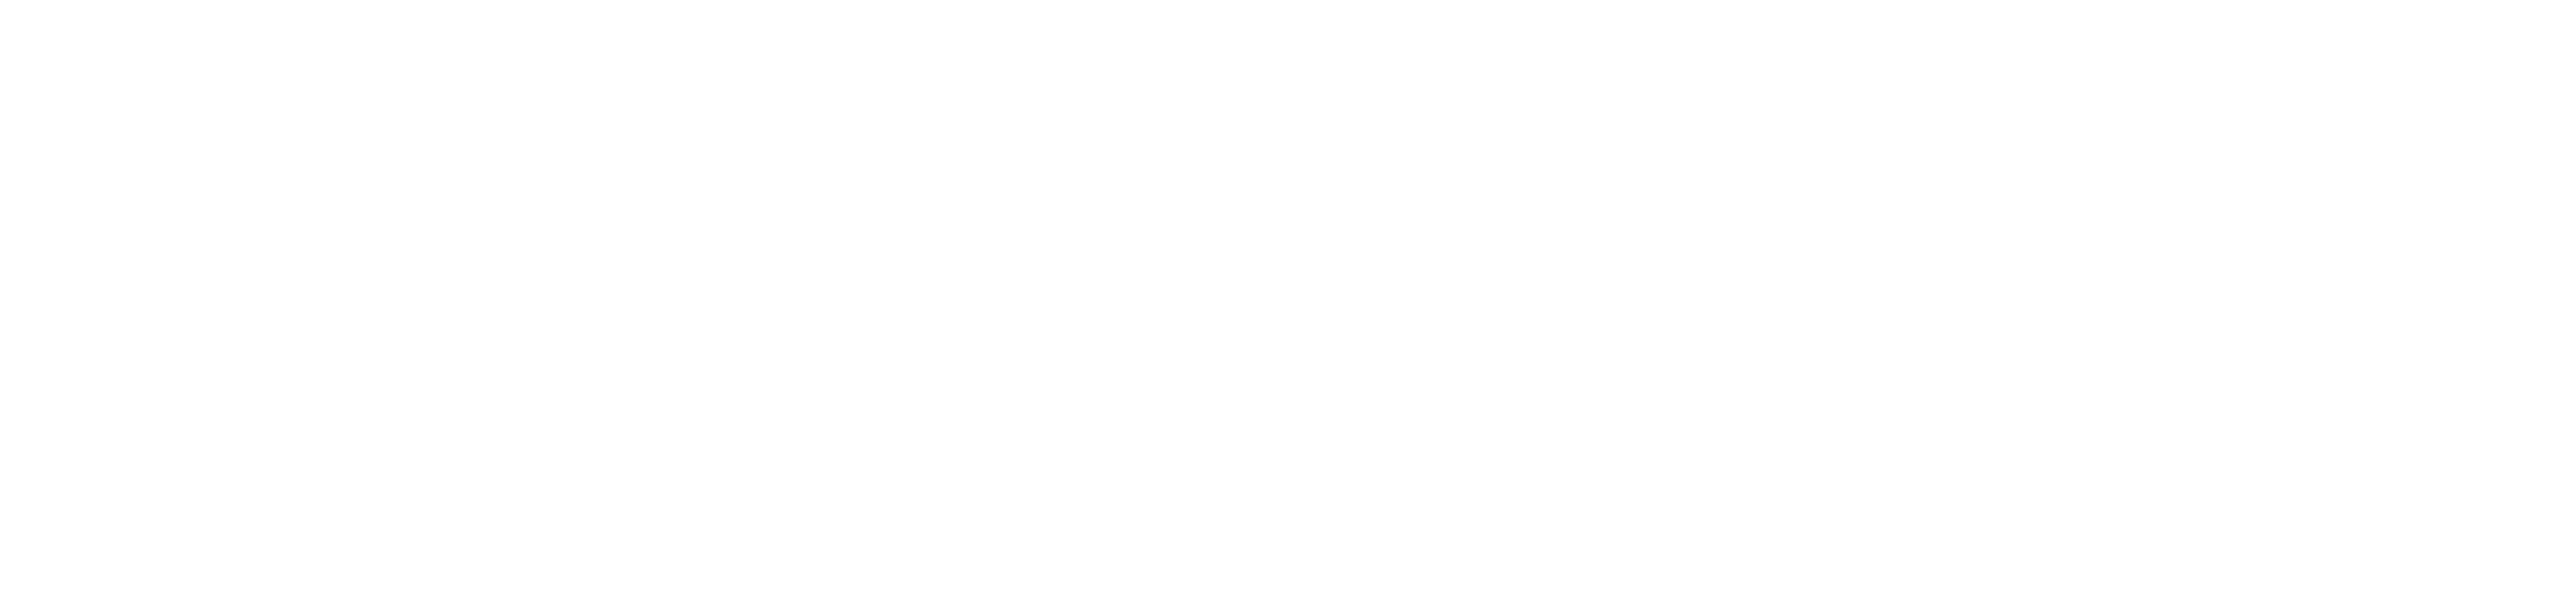 Nineteen Explore Logo